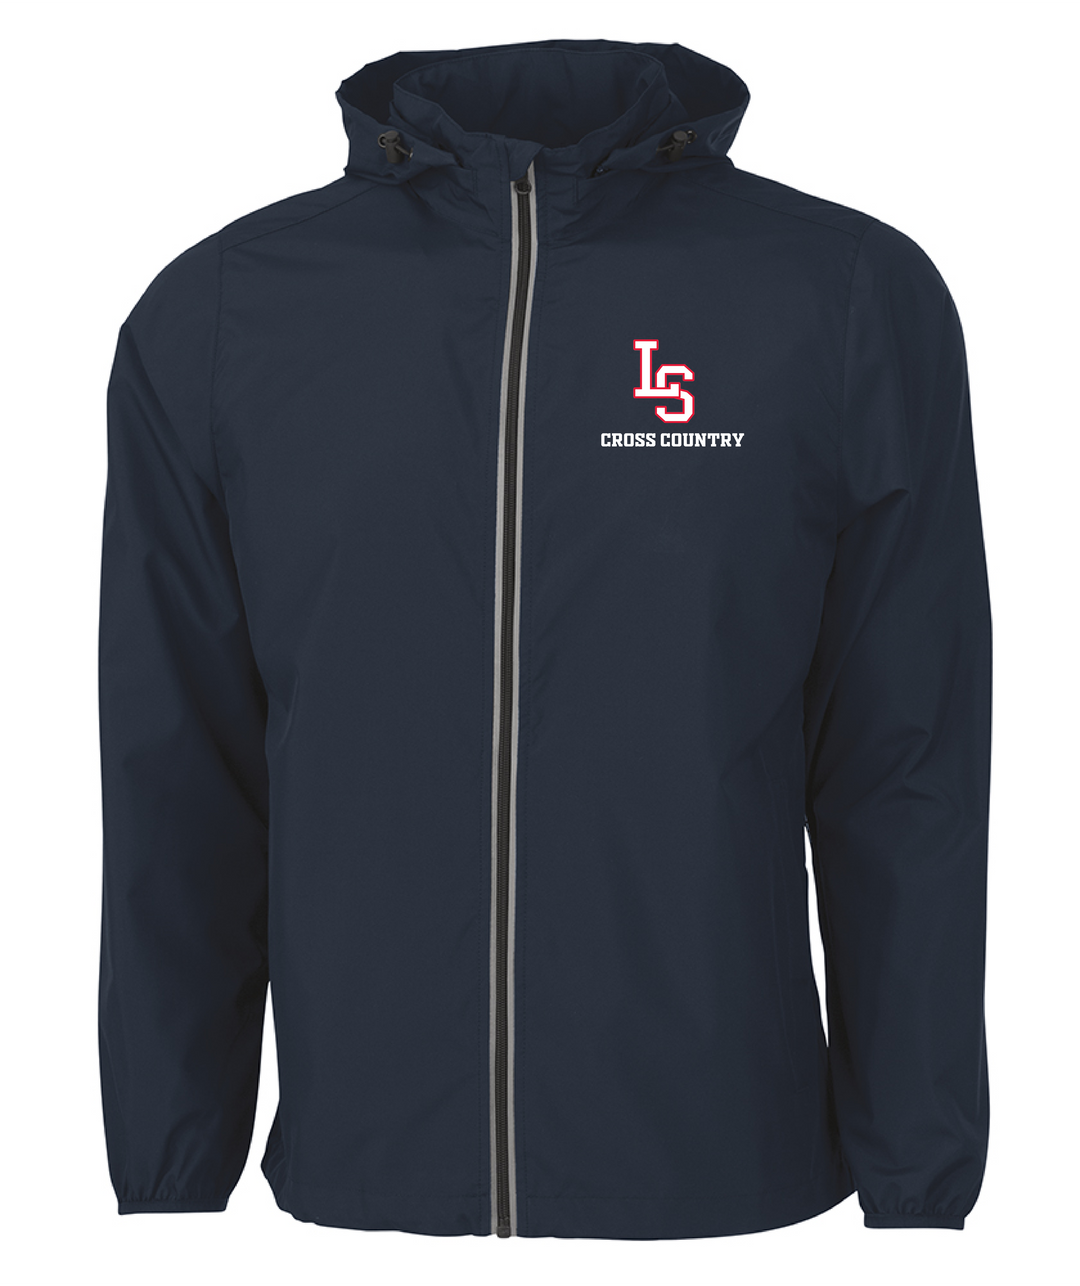 Lincoln Sudbury Cross Country Unisex Full Zip Reflective Jacket (9706)